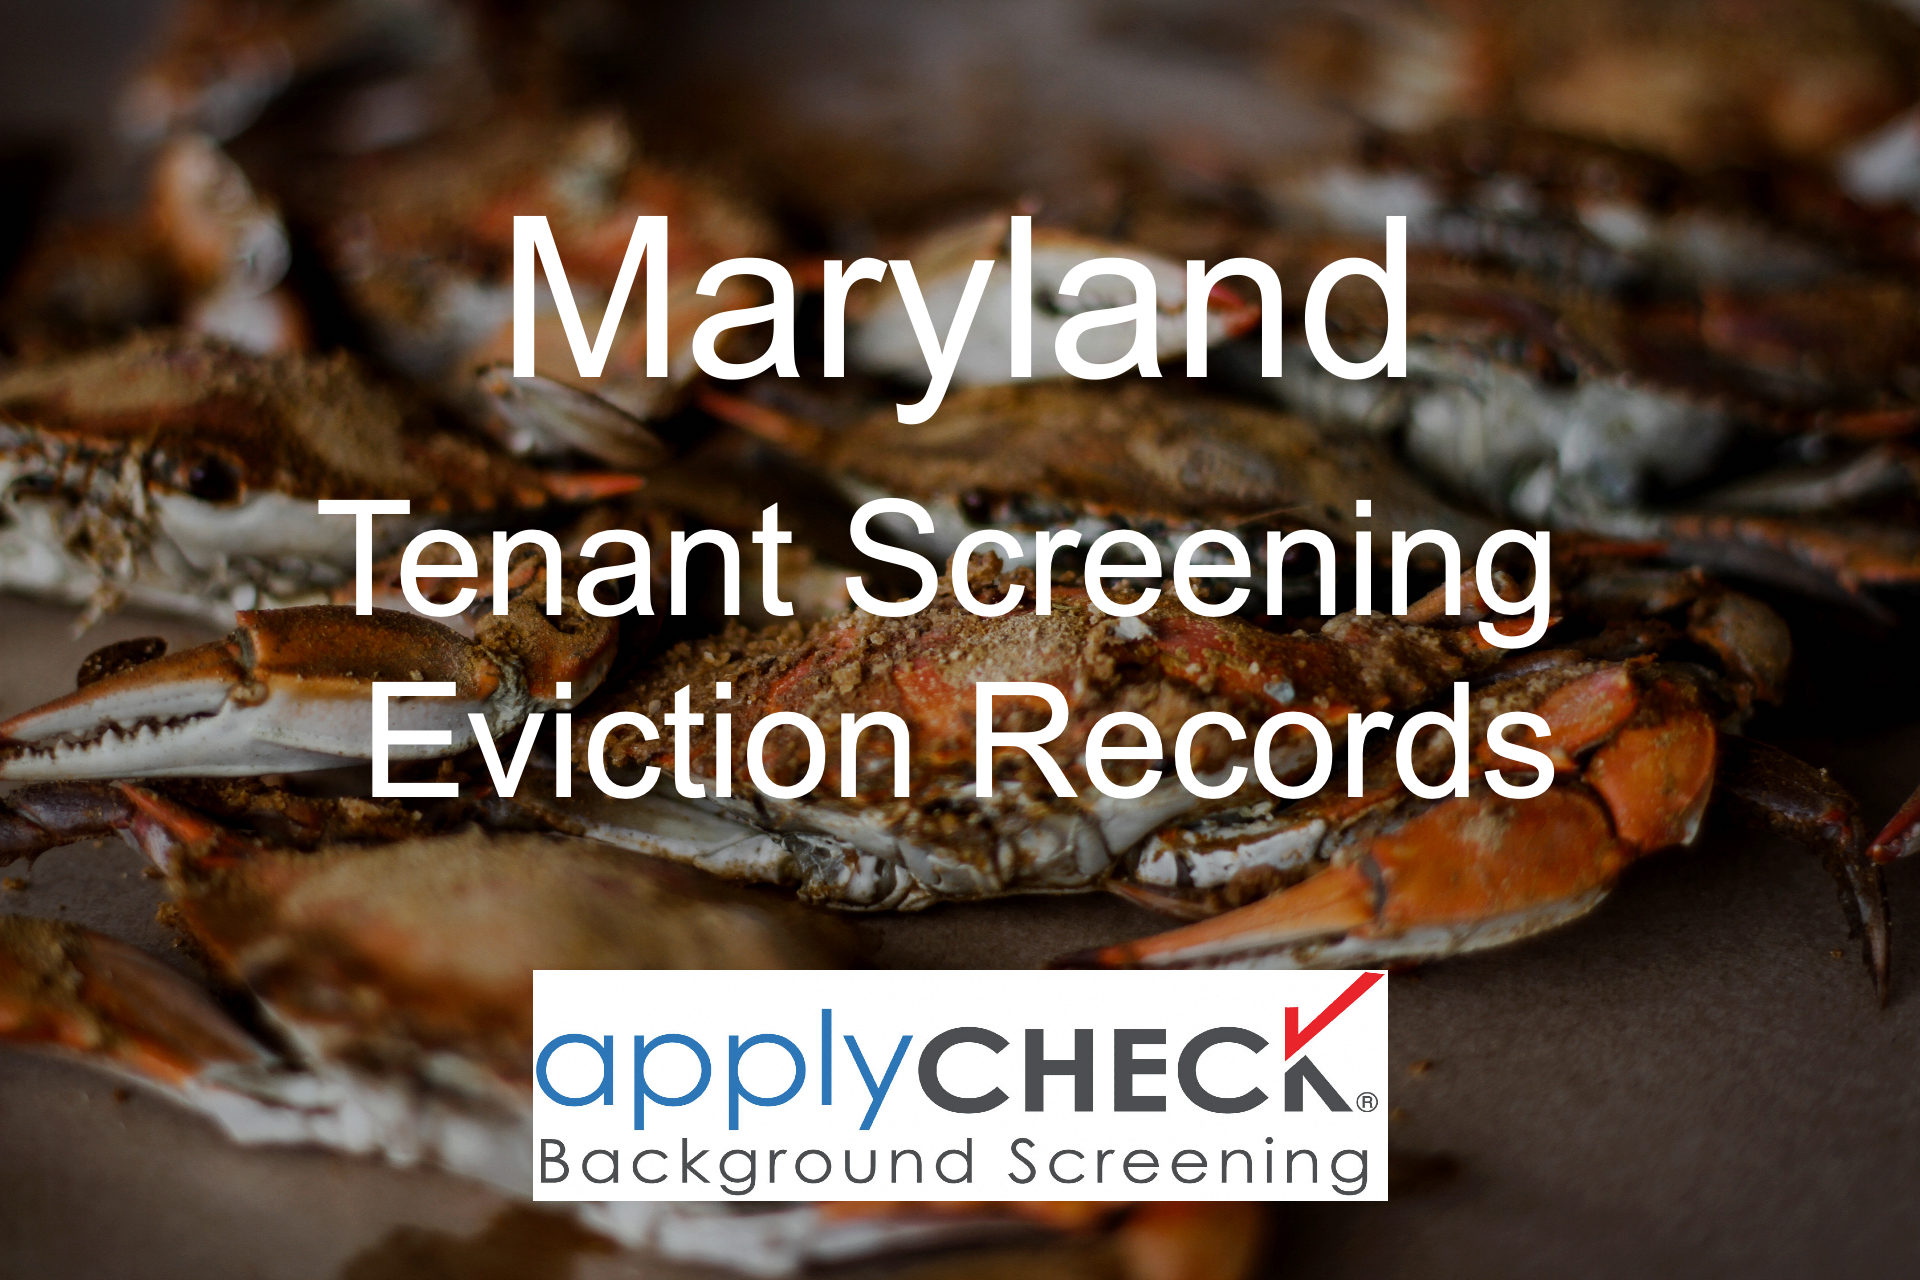 Maryland Tenant Screening and Eviction image